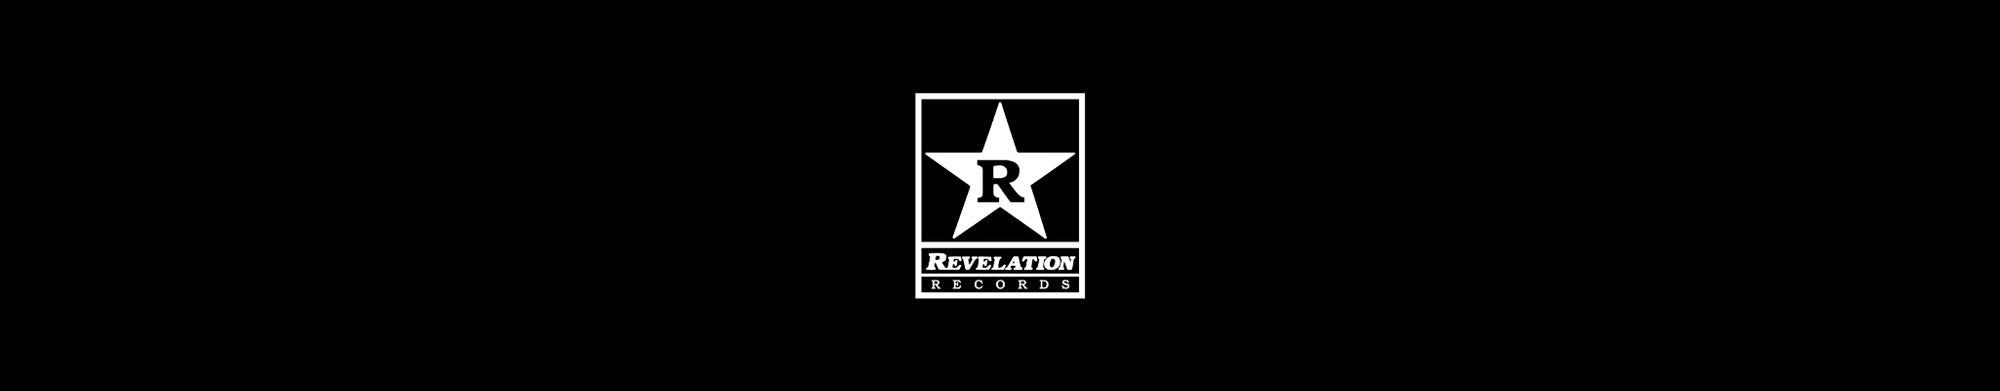 REVELATION RECORDS